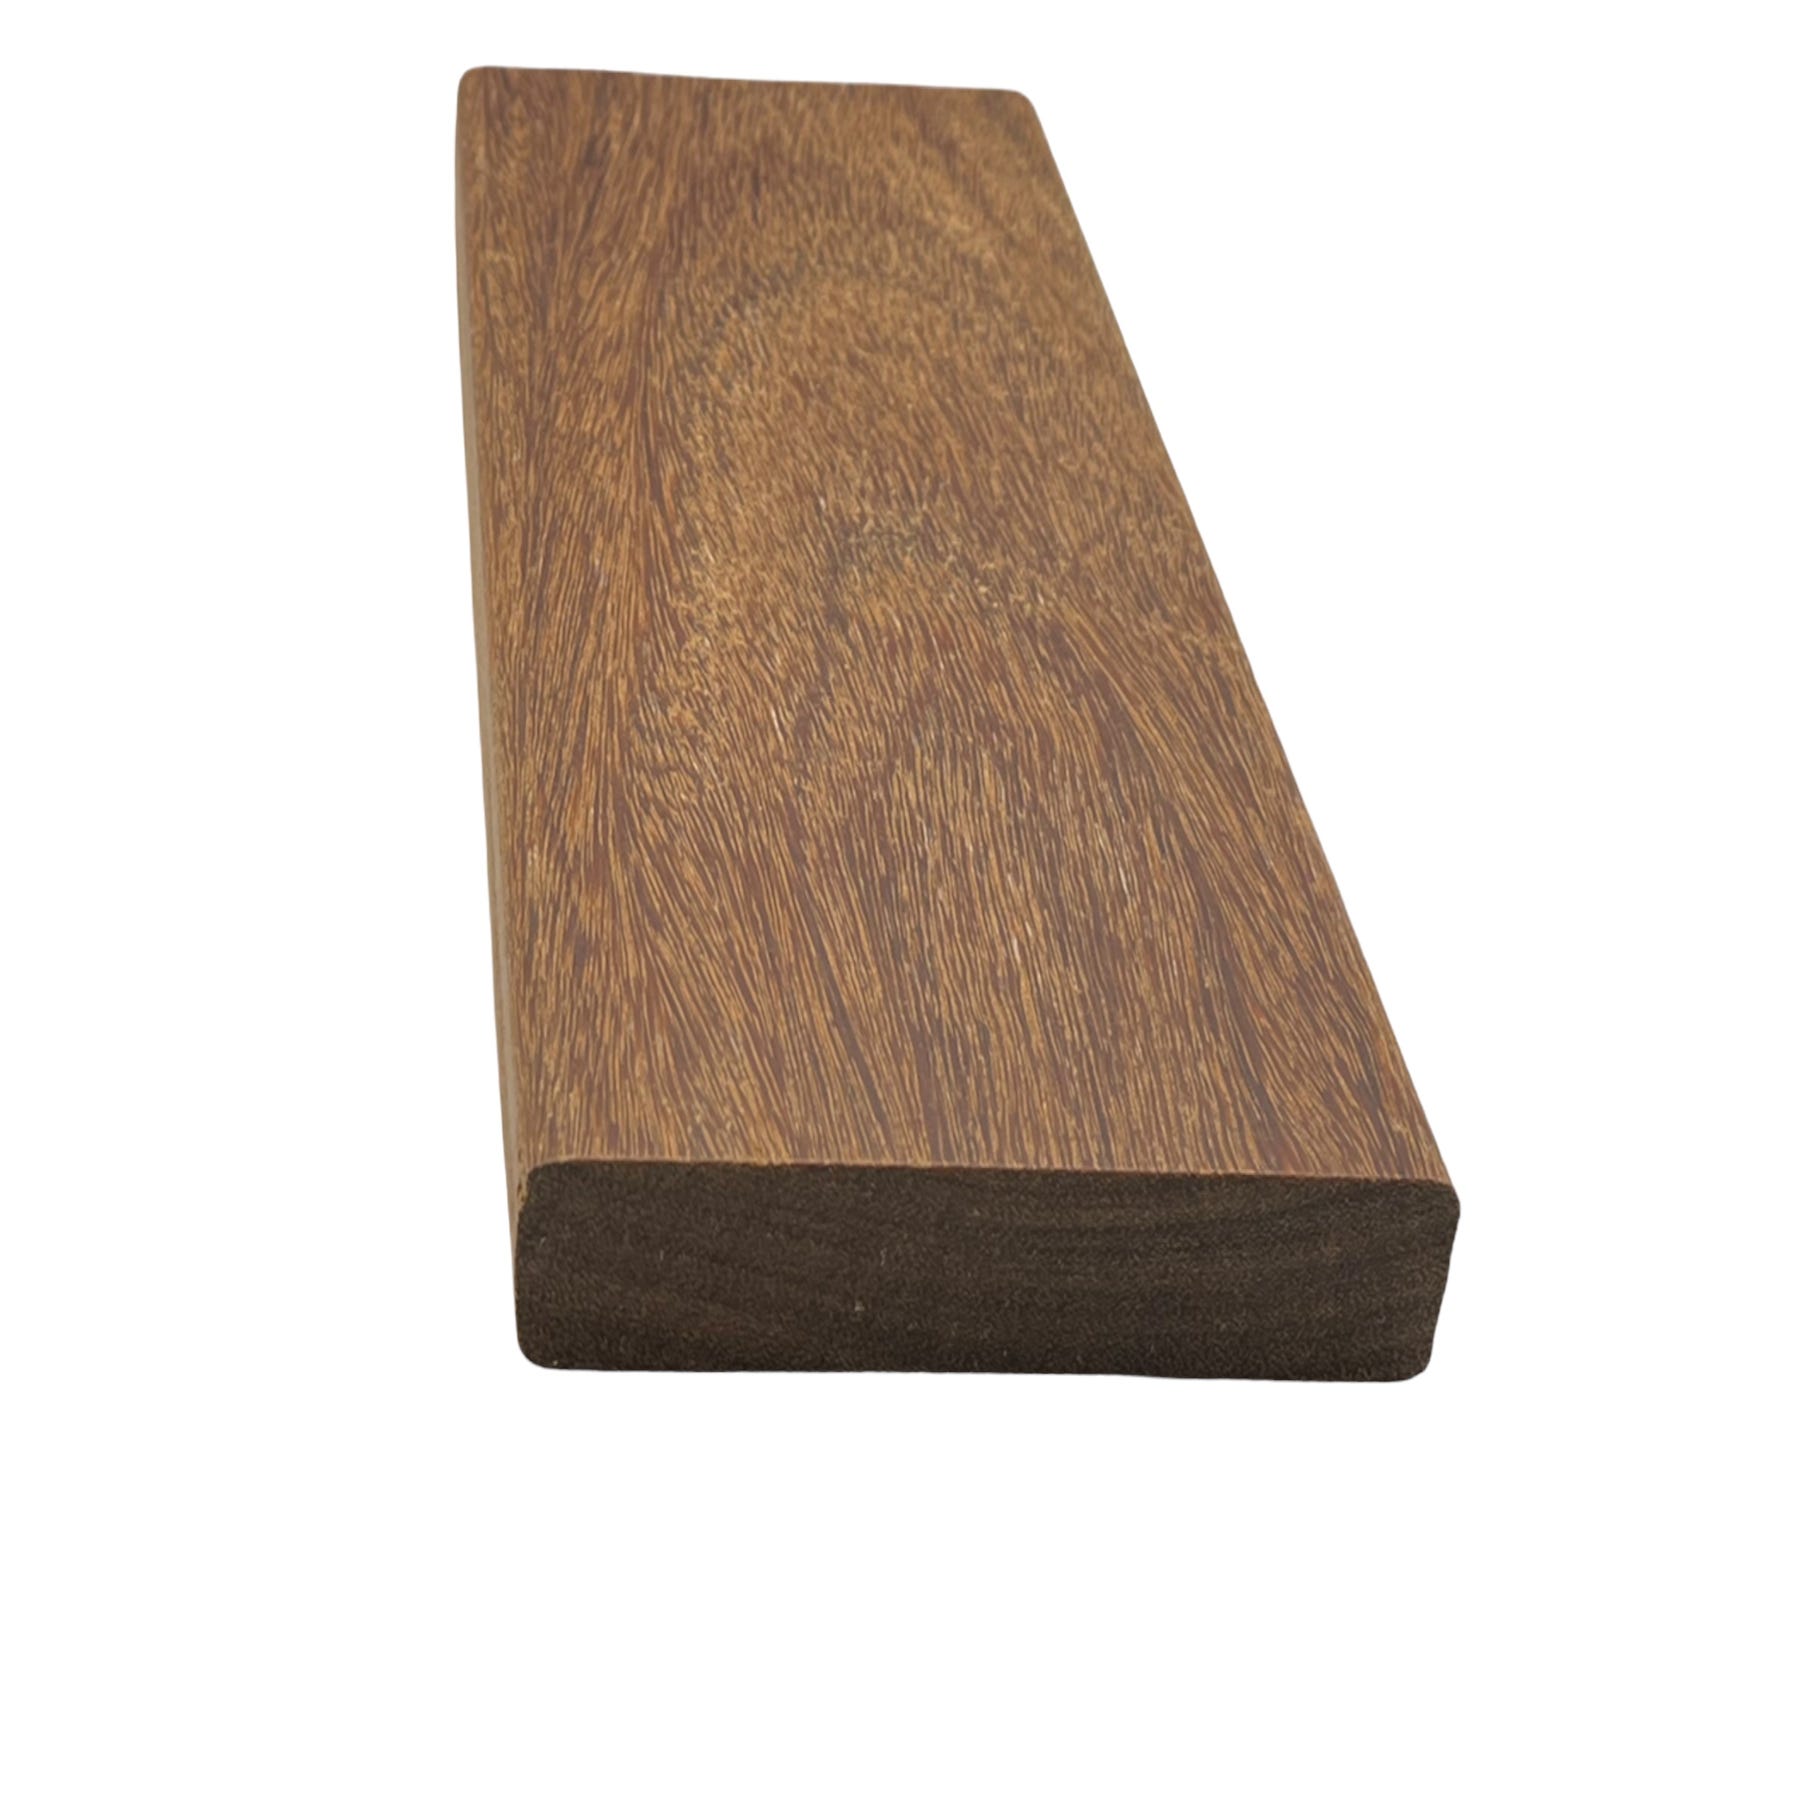 Tabla de madera para exterior Ipe, 21mm grosor